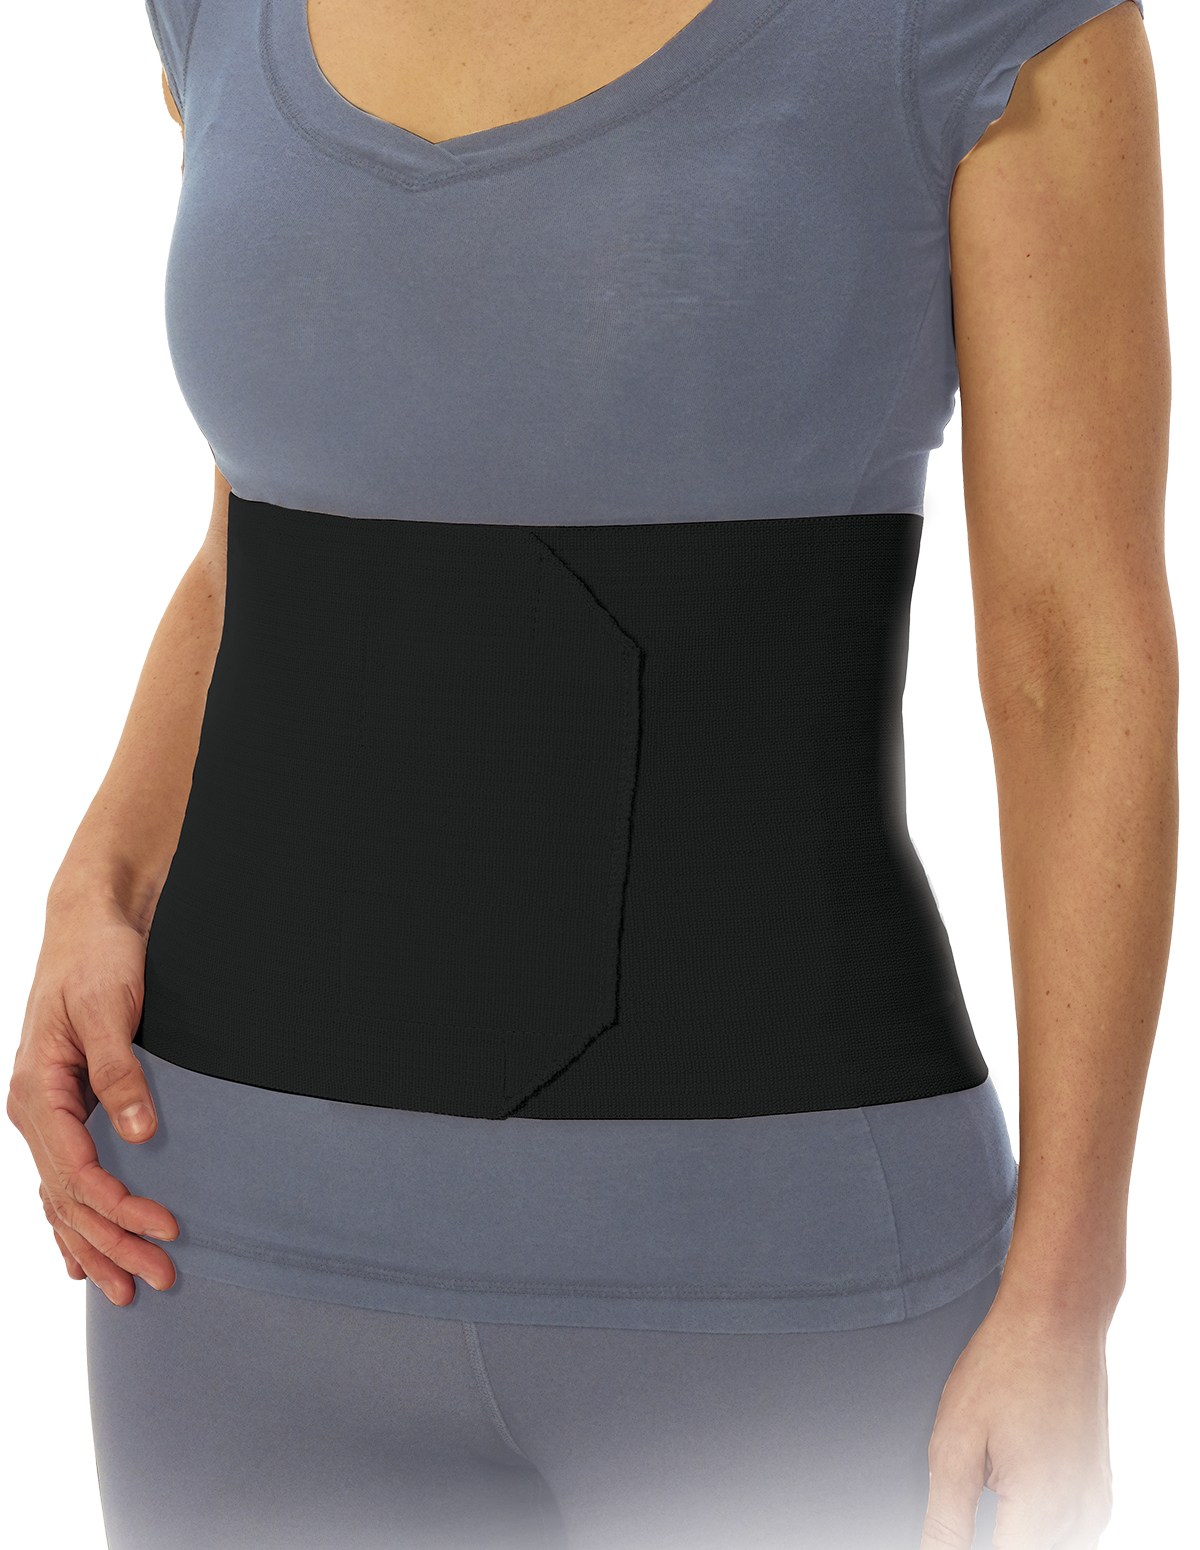 North American Health+Wellness JB7668L Pelvic Back Pain Belt - Large